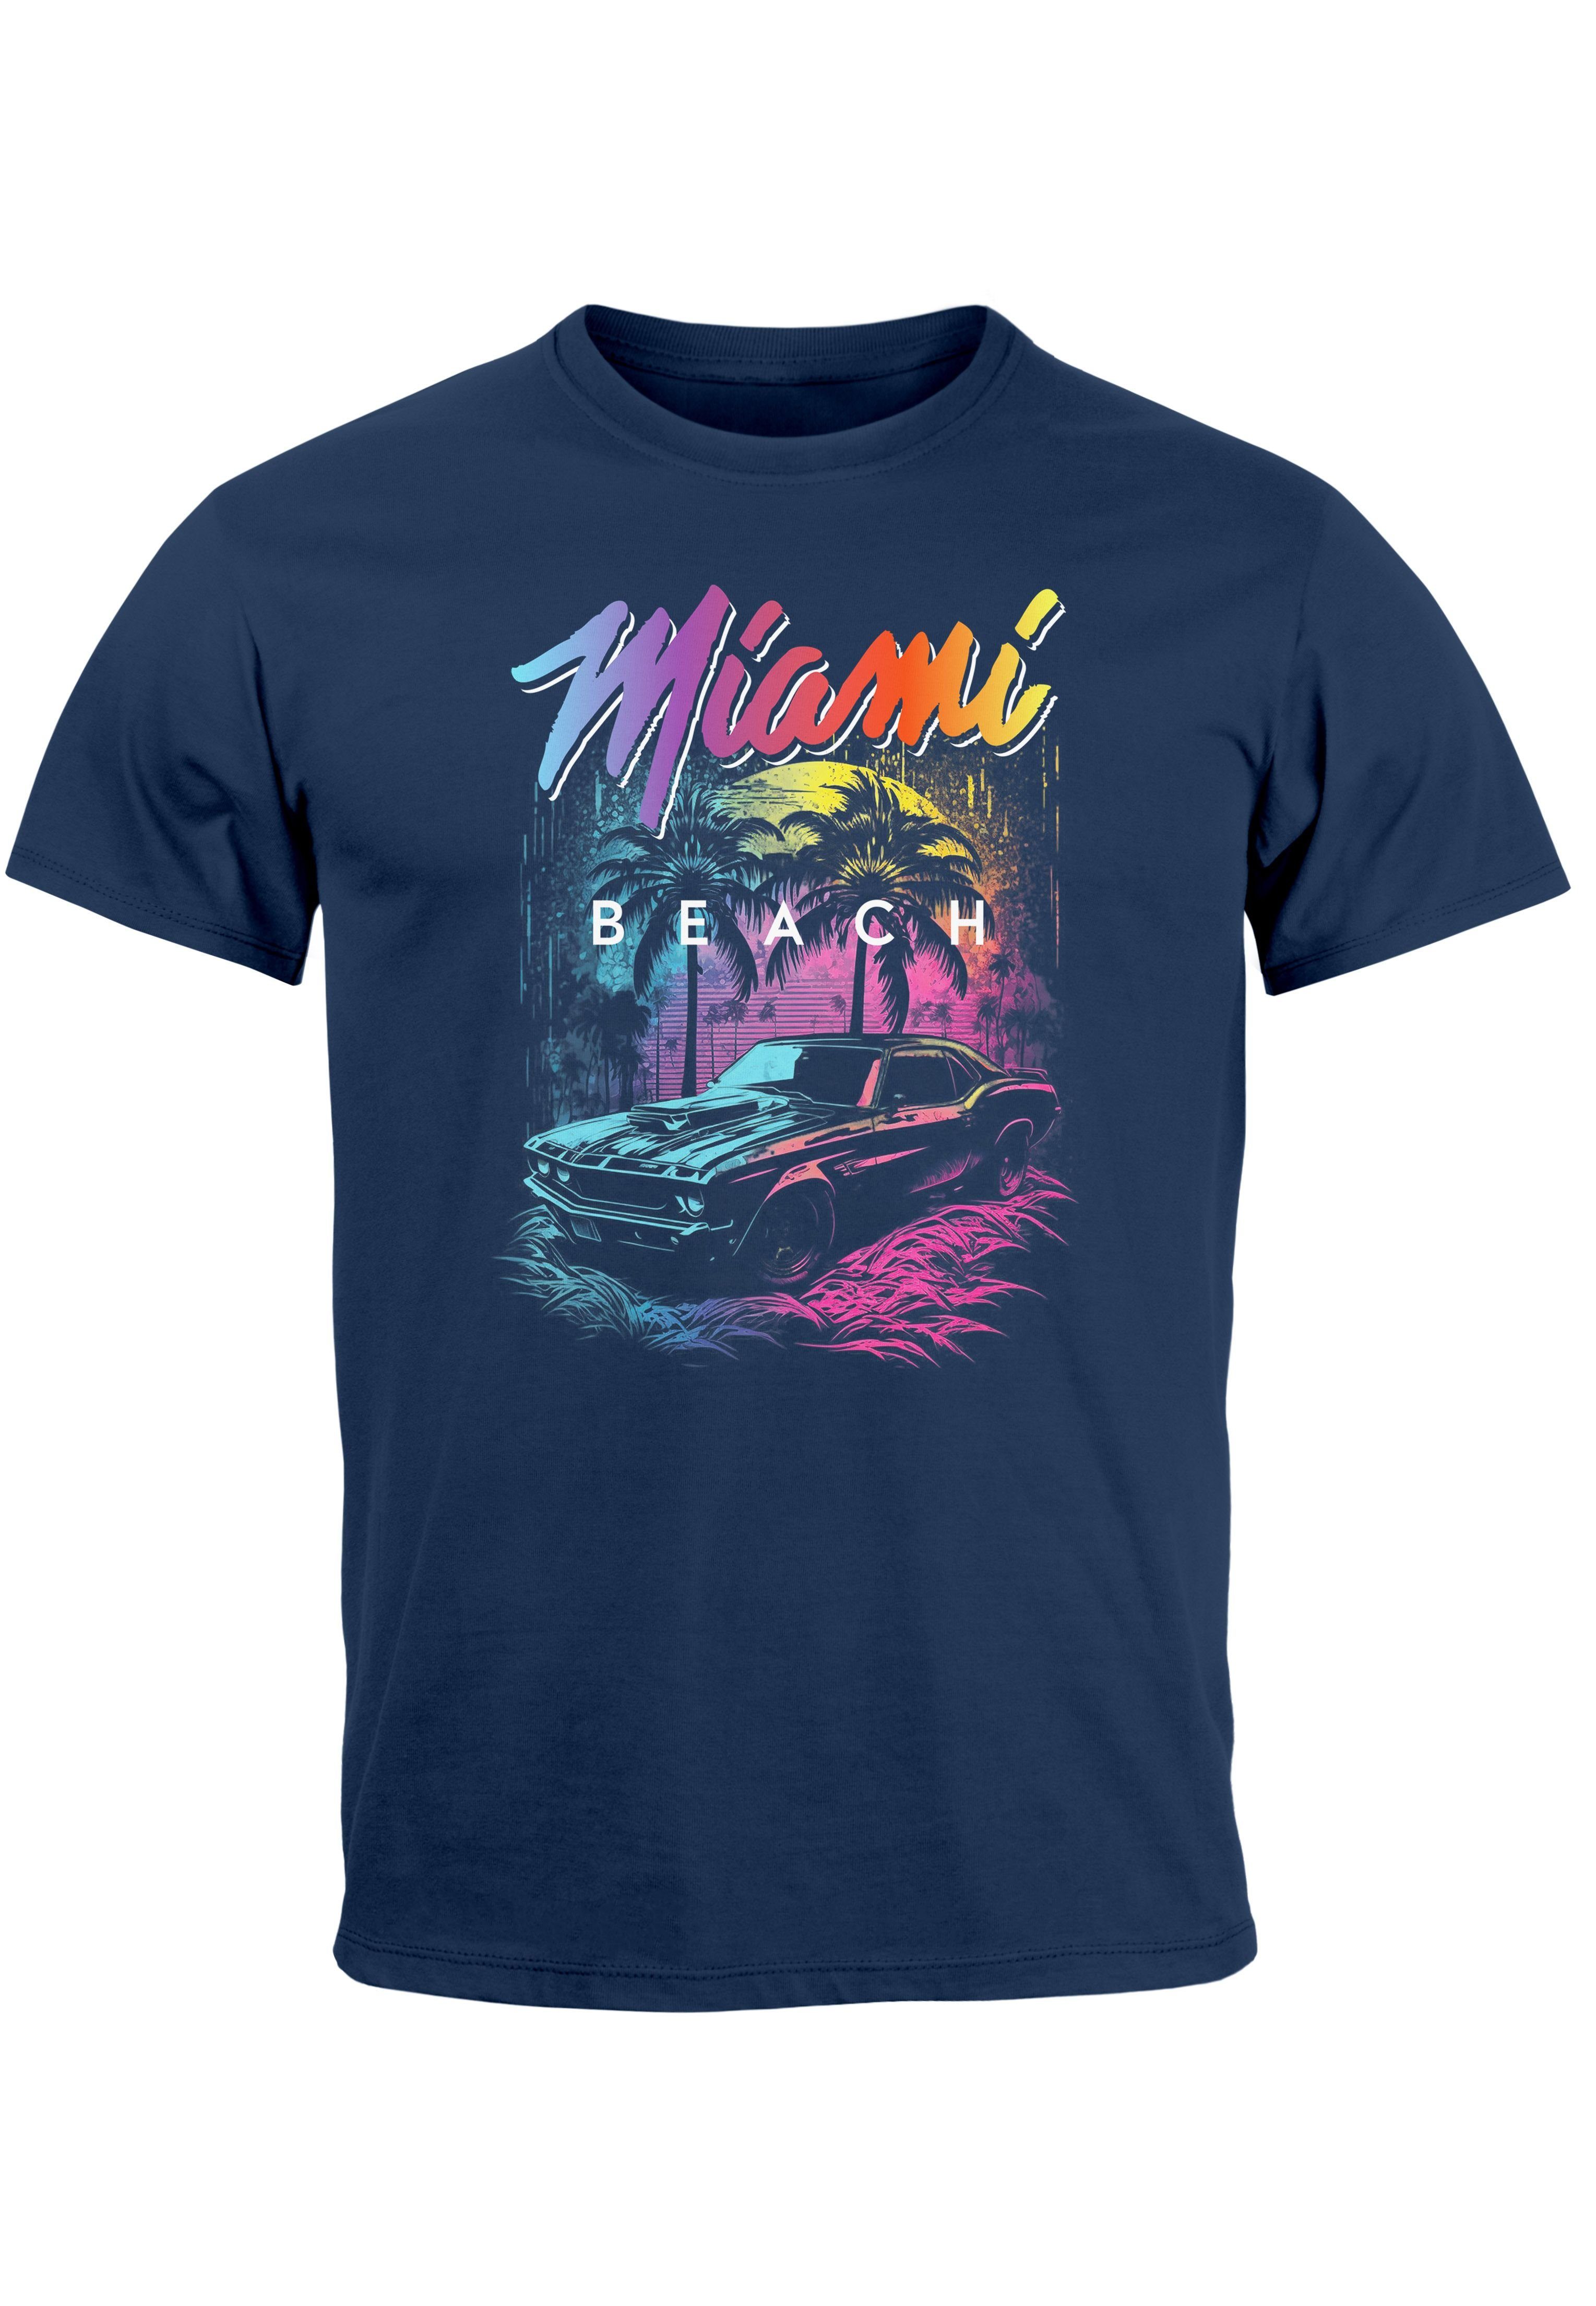 T-Shirt Herren Miami Fashion Beach Neverless Print Stree Car navy Oldtimer Print Print-Shirt USA Palmen mit